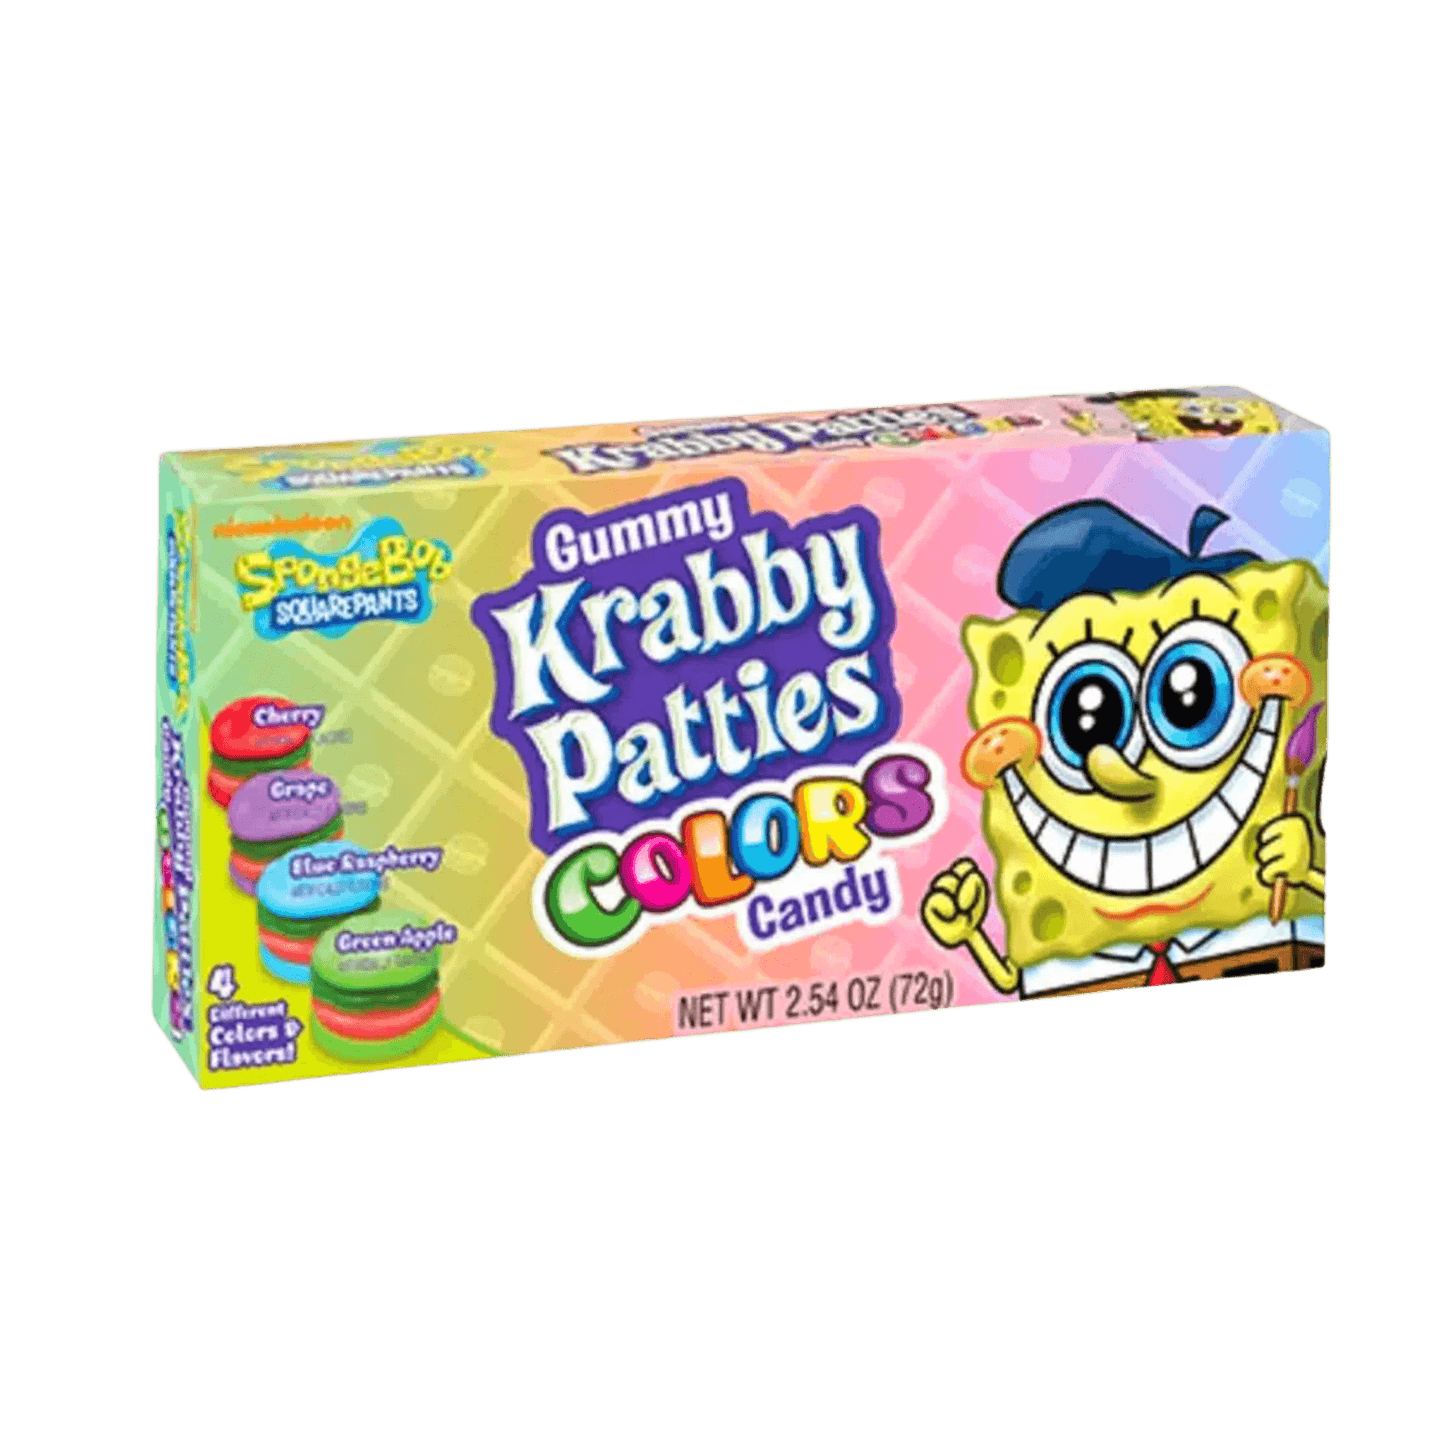 Spongebob Squarepants | Gummy Krabby Patties Colors (72g) - Scran.ie